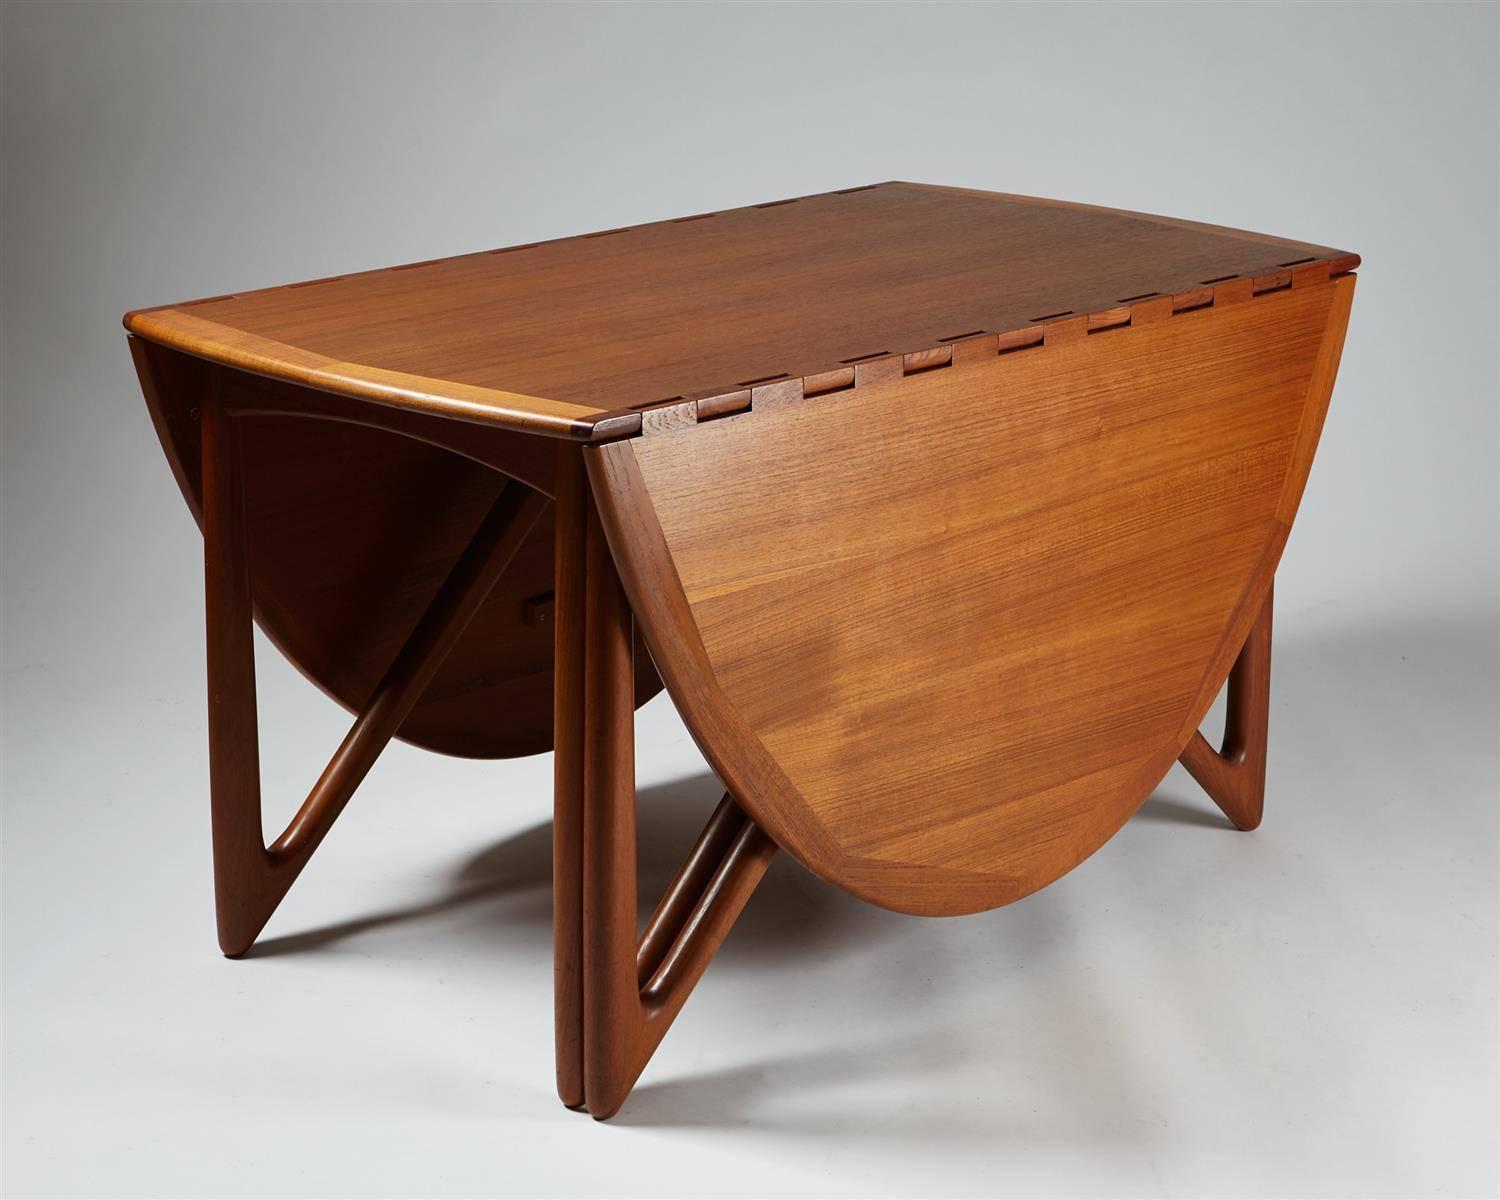 Dining table designed by Niels Koefoed,
Denmark, 1960s.

Teak.

Dimensions: 
H: 72.5 cm/ 28 3/4''
Length when extended: 196 cm/ 6' 4''
W: 130 cm/ 4' 3''